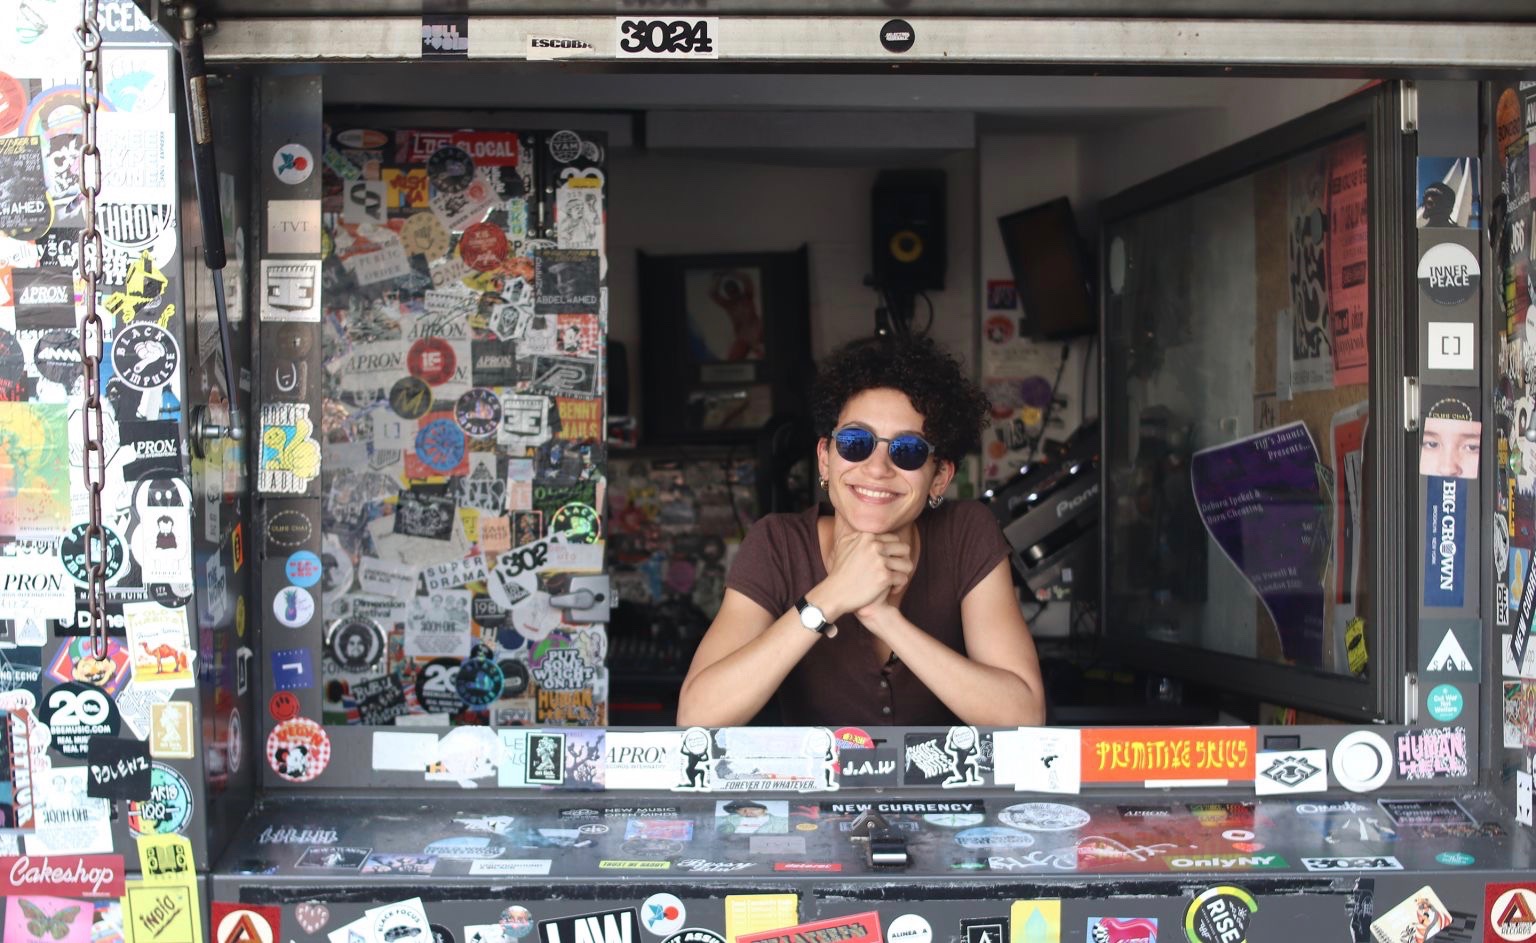 Tunisian DJ/Producer Deena Abdelwahed Aced Her NTS Radio Set